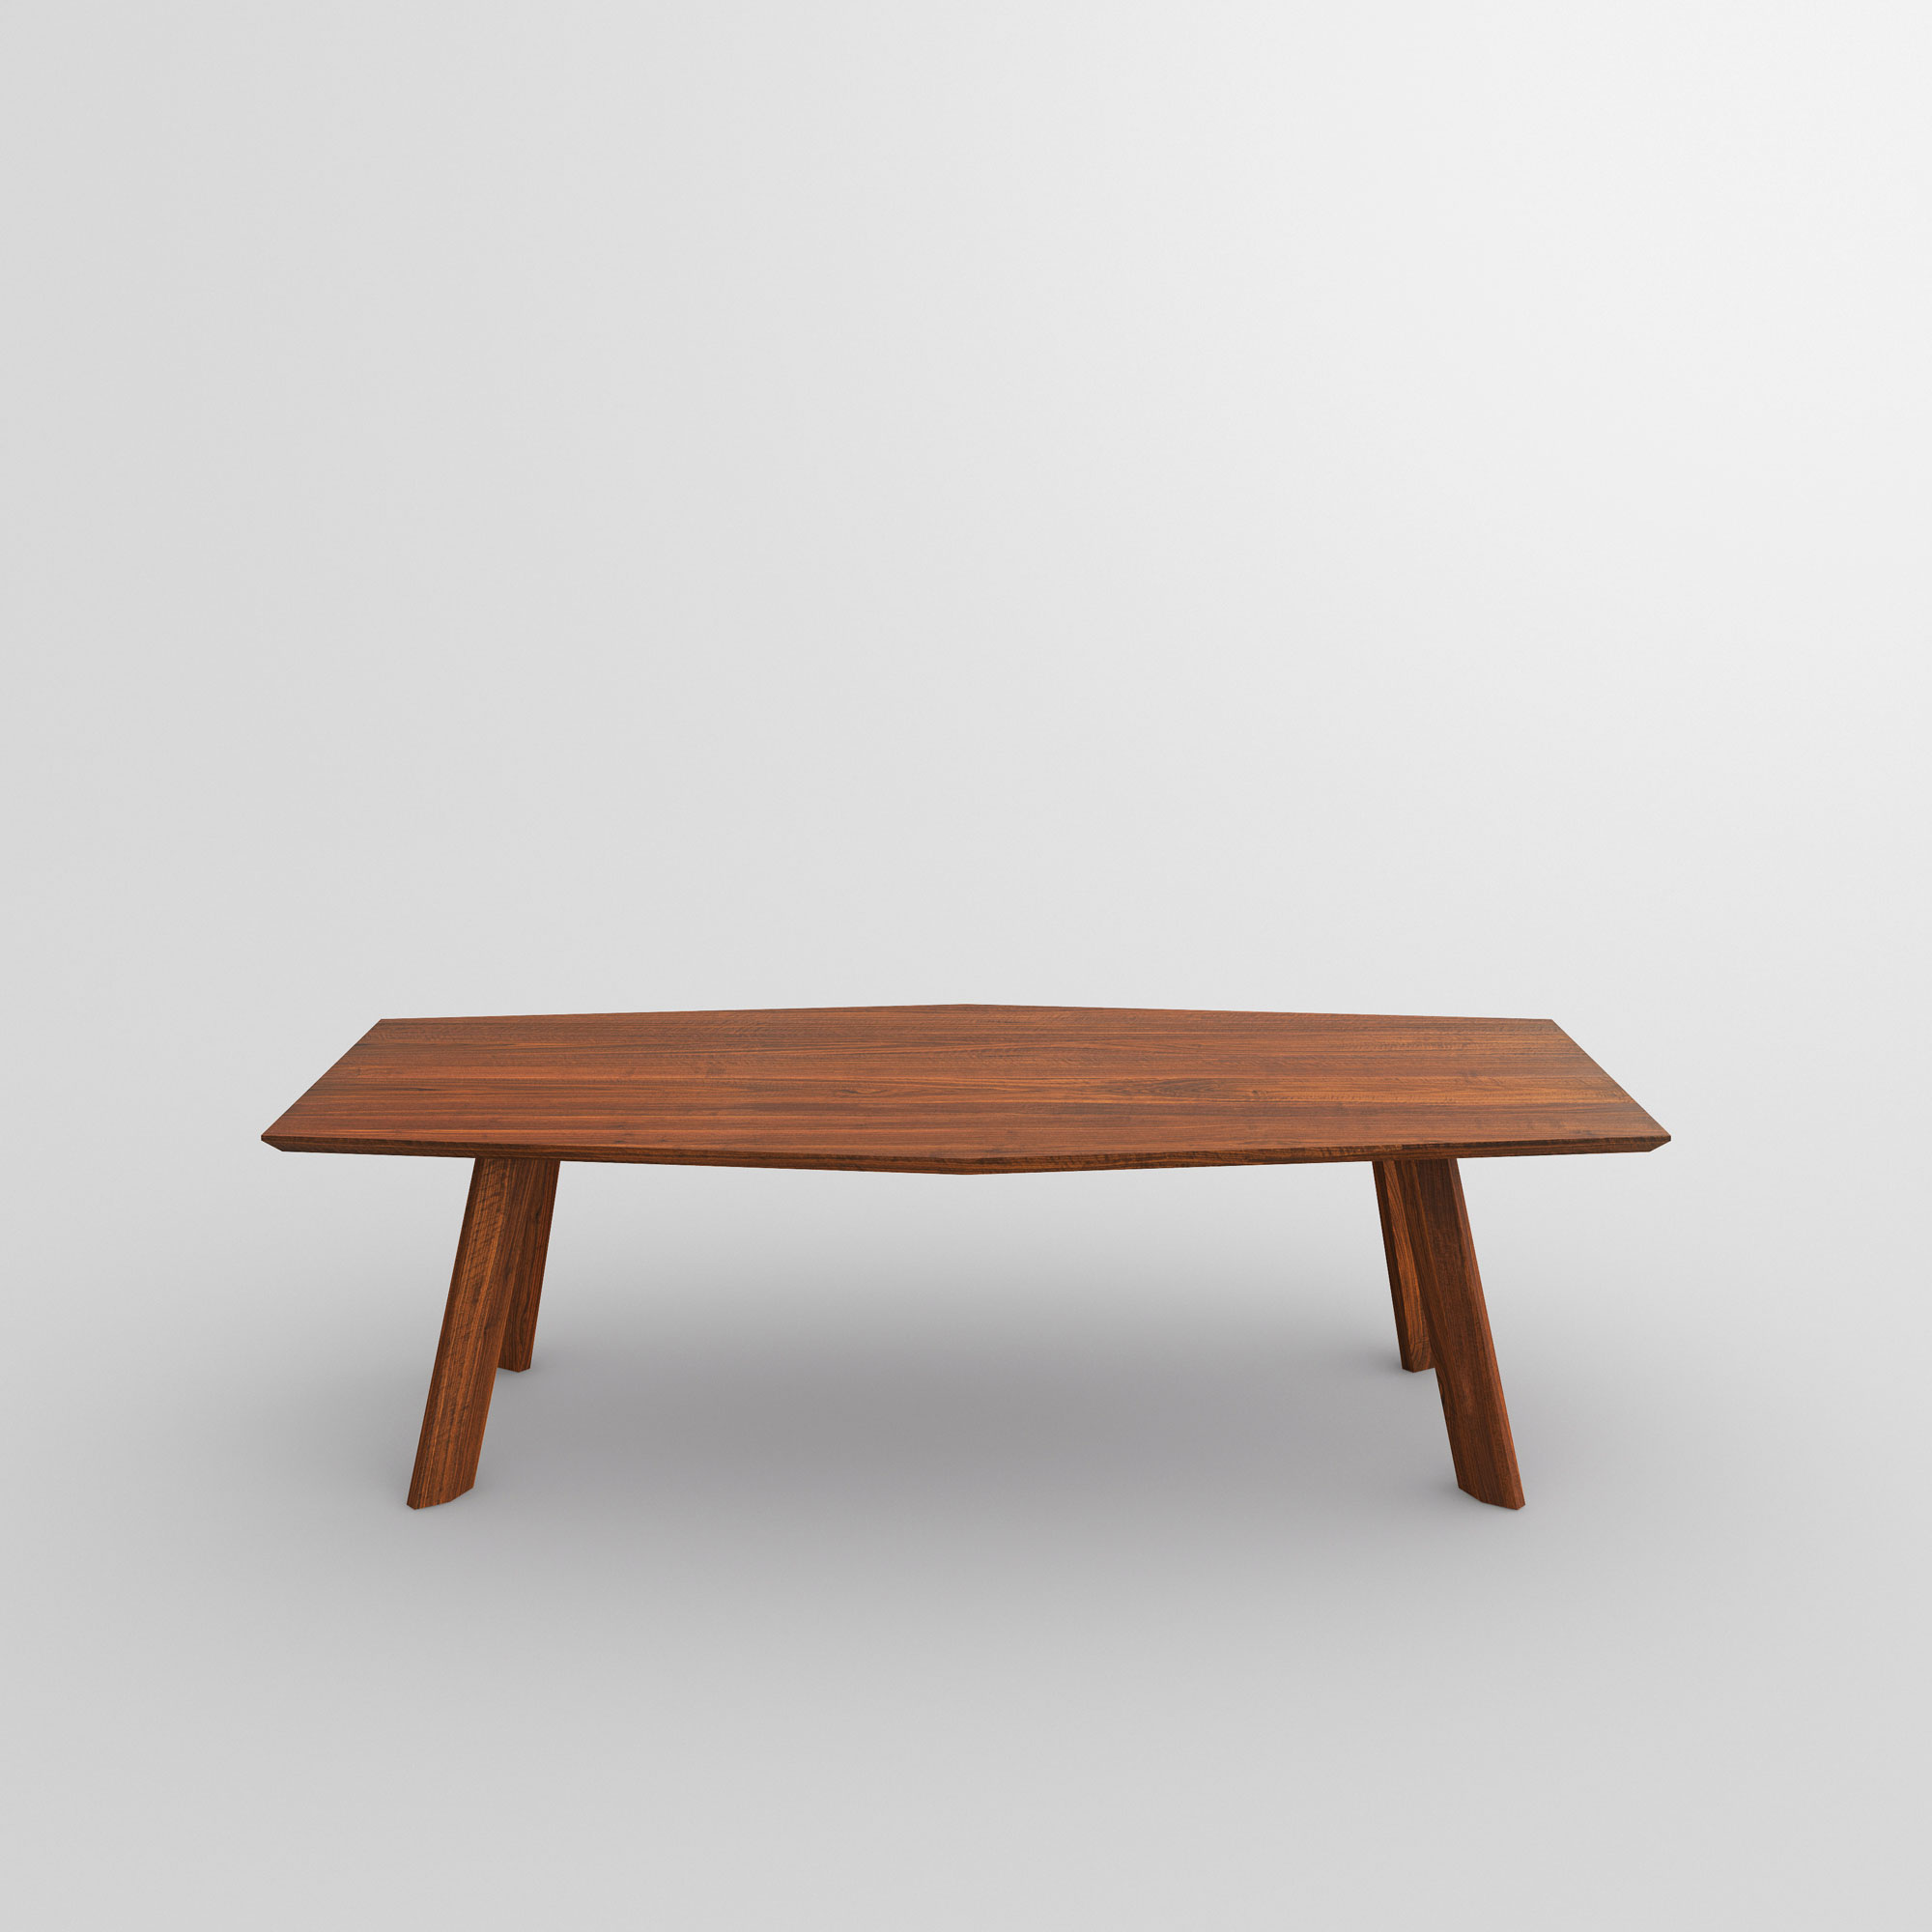 Designer Dining Table RHOMBI cam3 custom made in solid wood by vitamin design